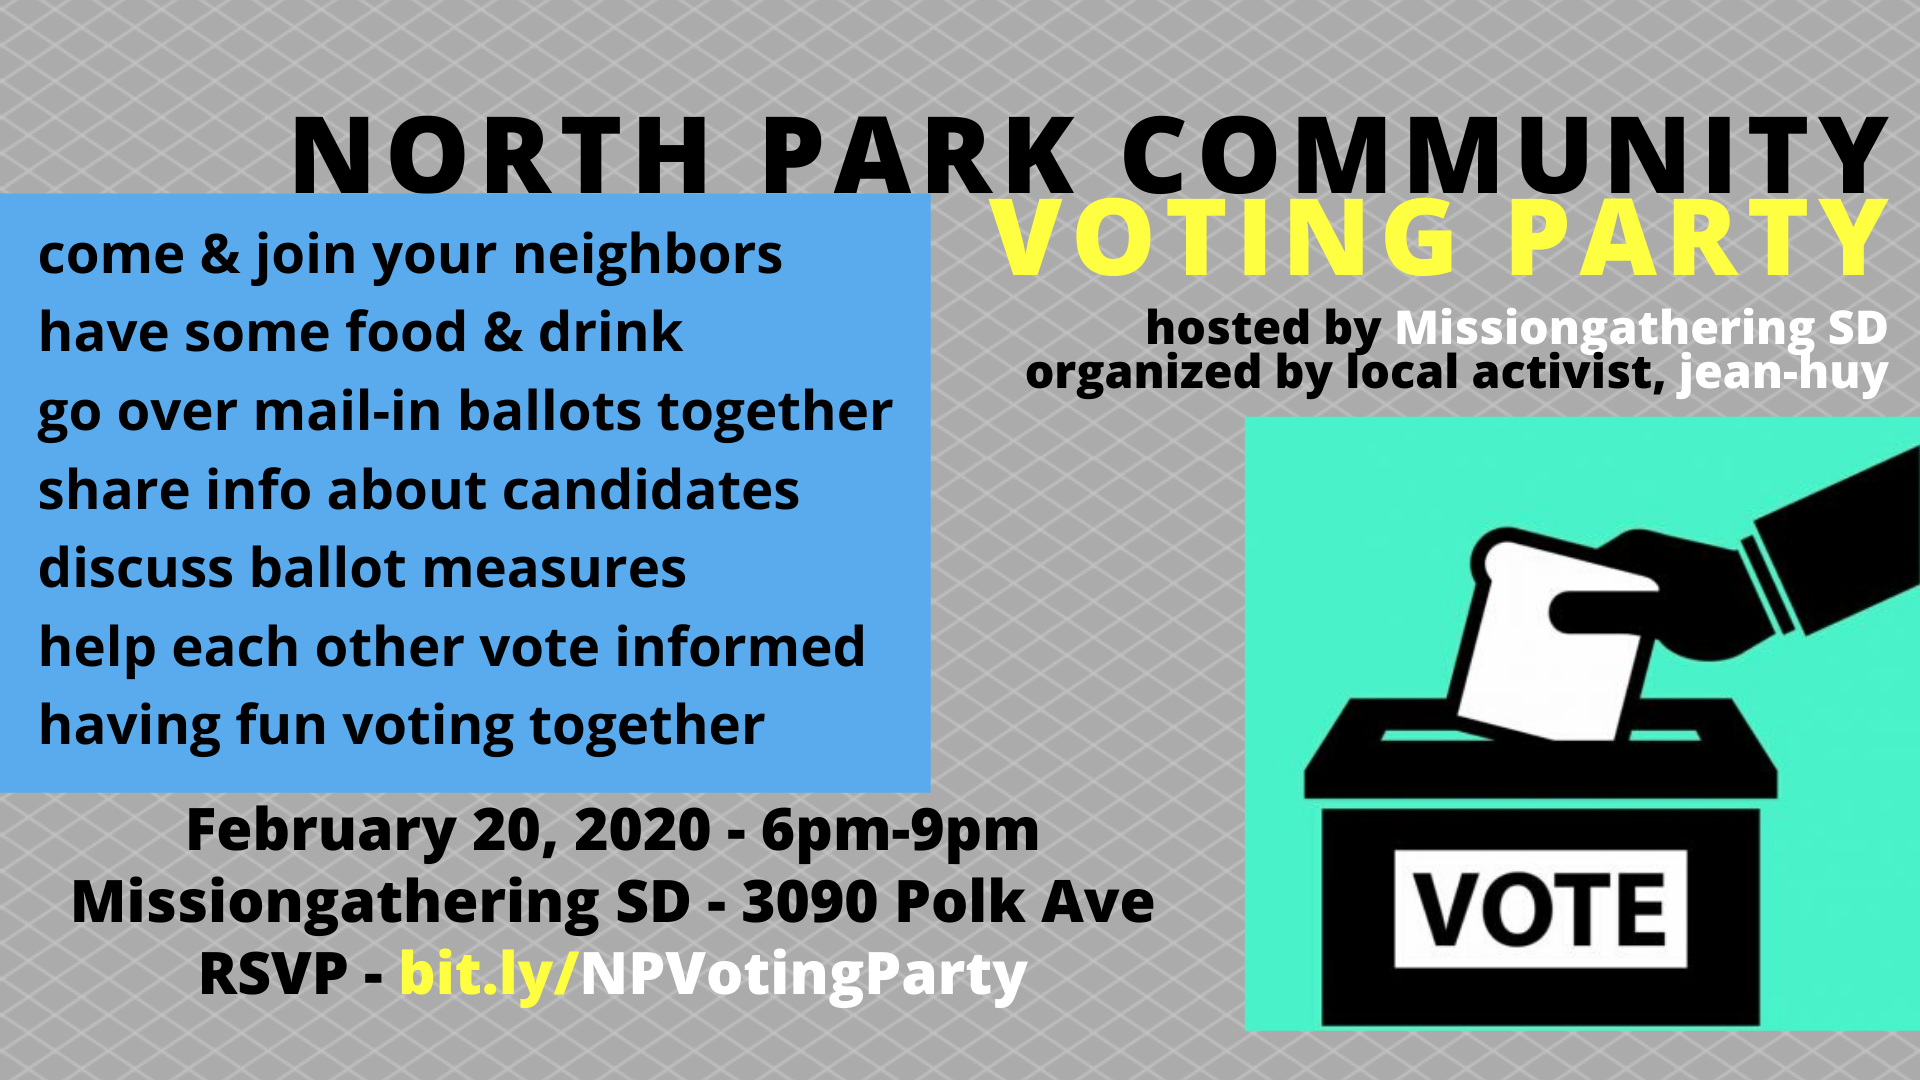 North Park Community - Voting Party